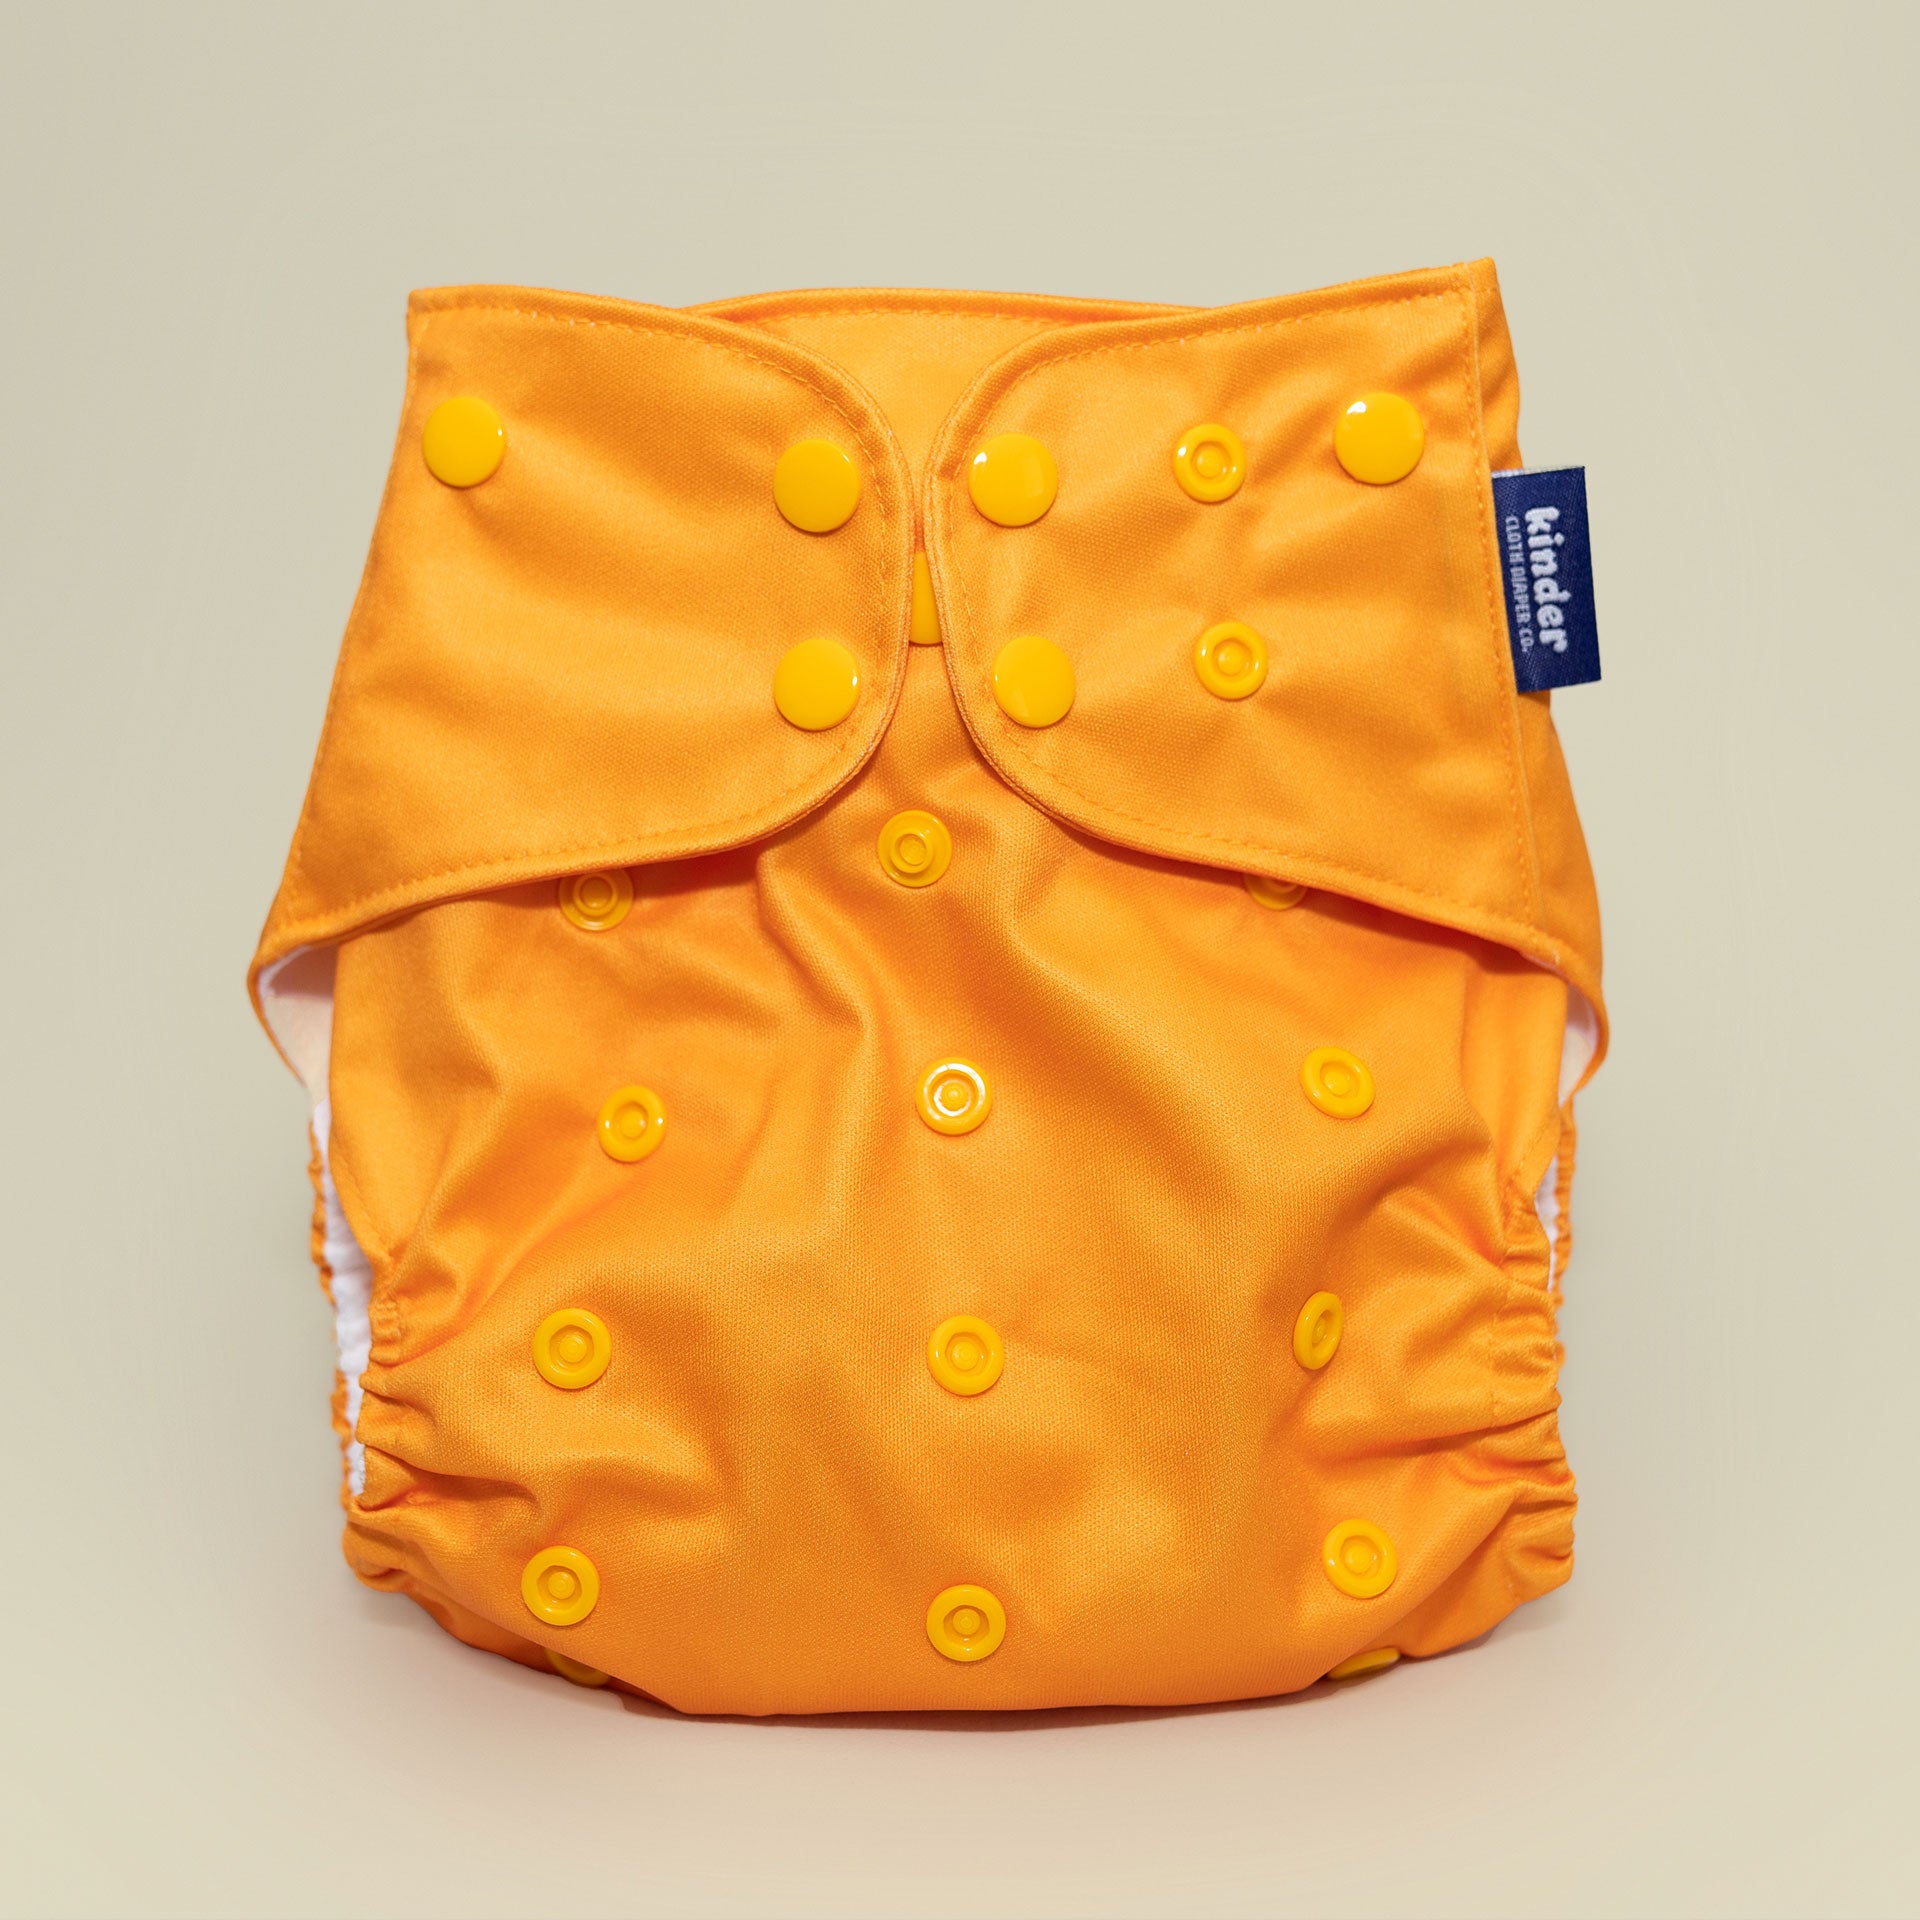 Modern Reusable Cloth Pocket Diaper Yellow Orange Mustard Solid Color AWJ Mesh Tummy Panel